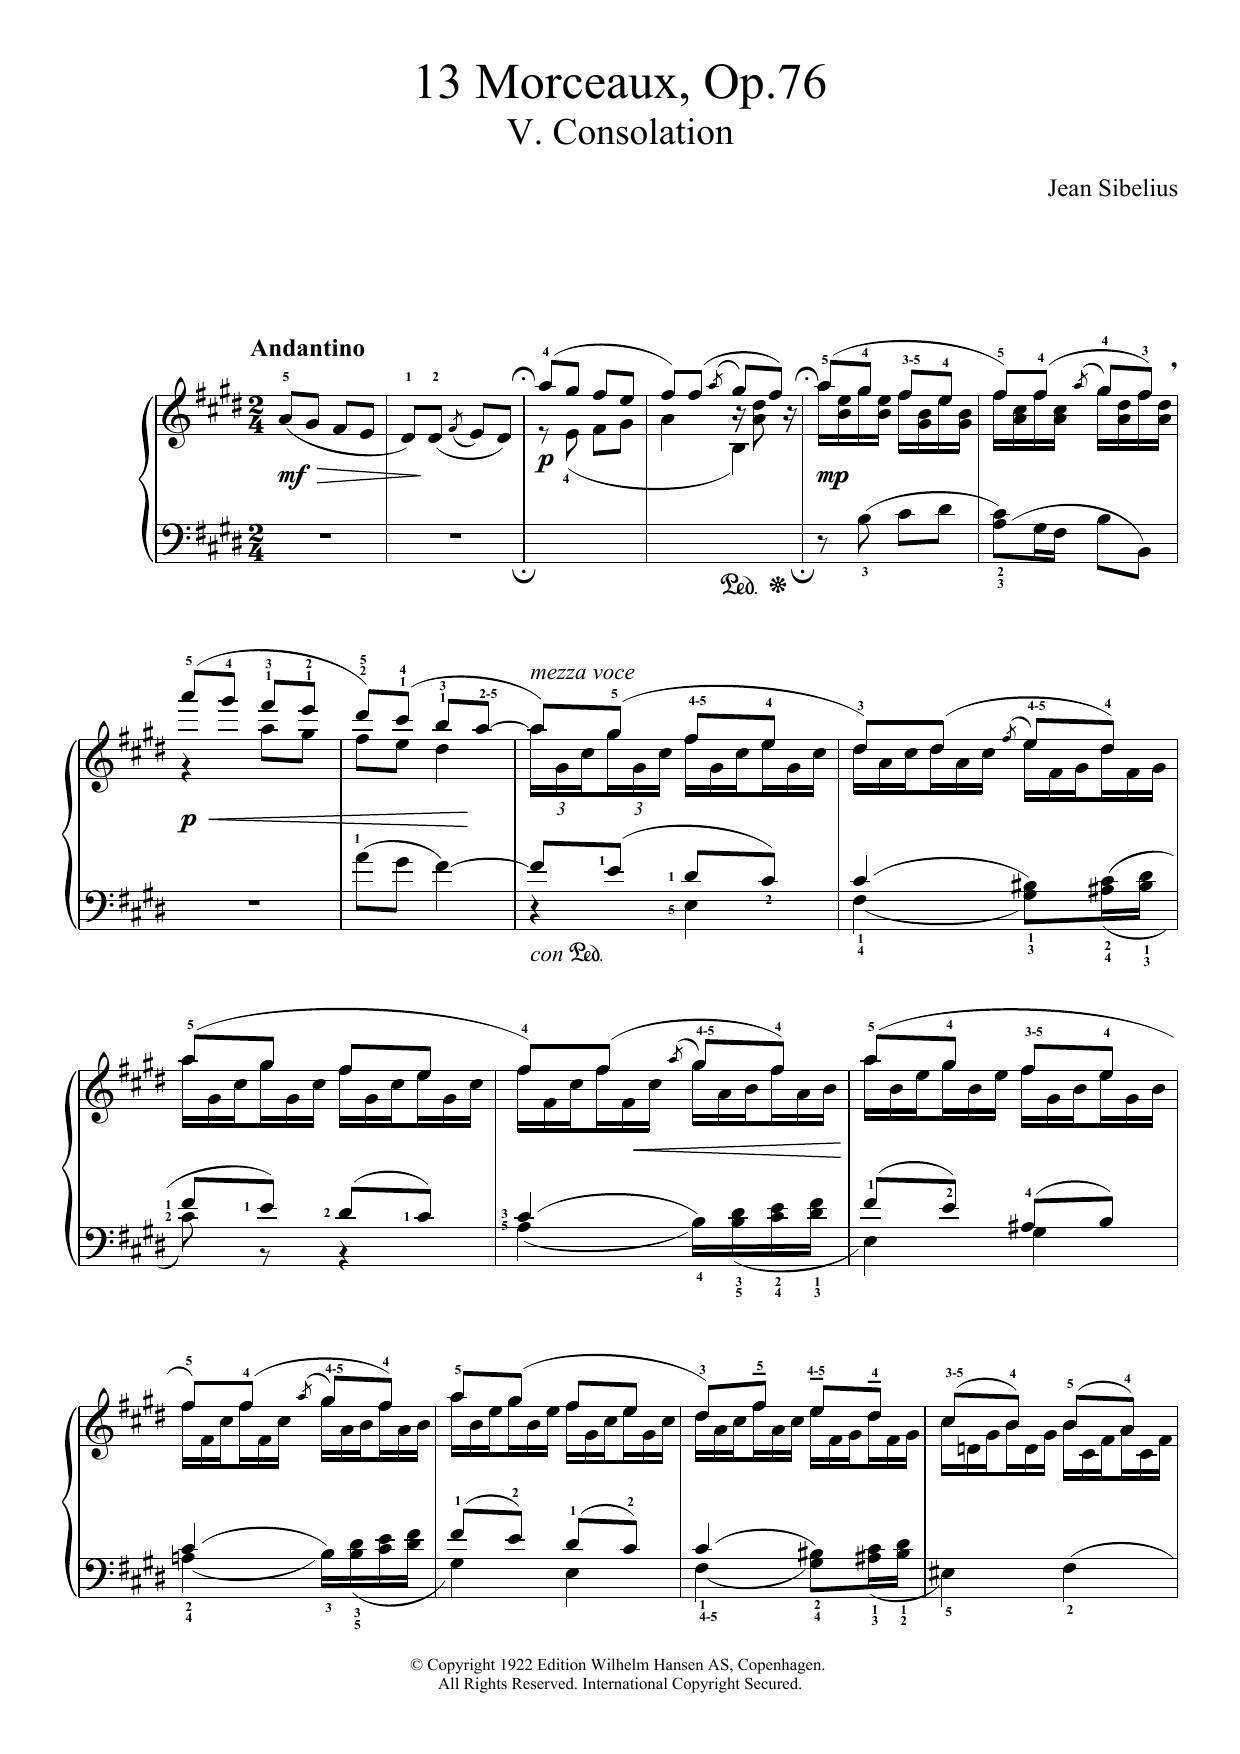 Download Jean Sibelius 13 Morceaux, Op.76 - V. Consolation Sheet Music